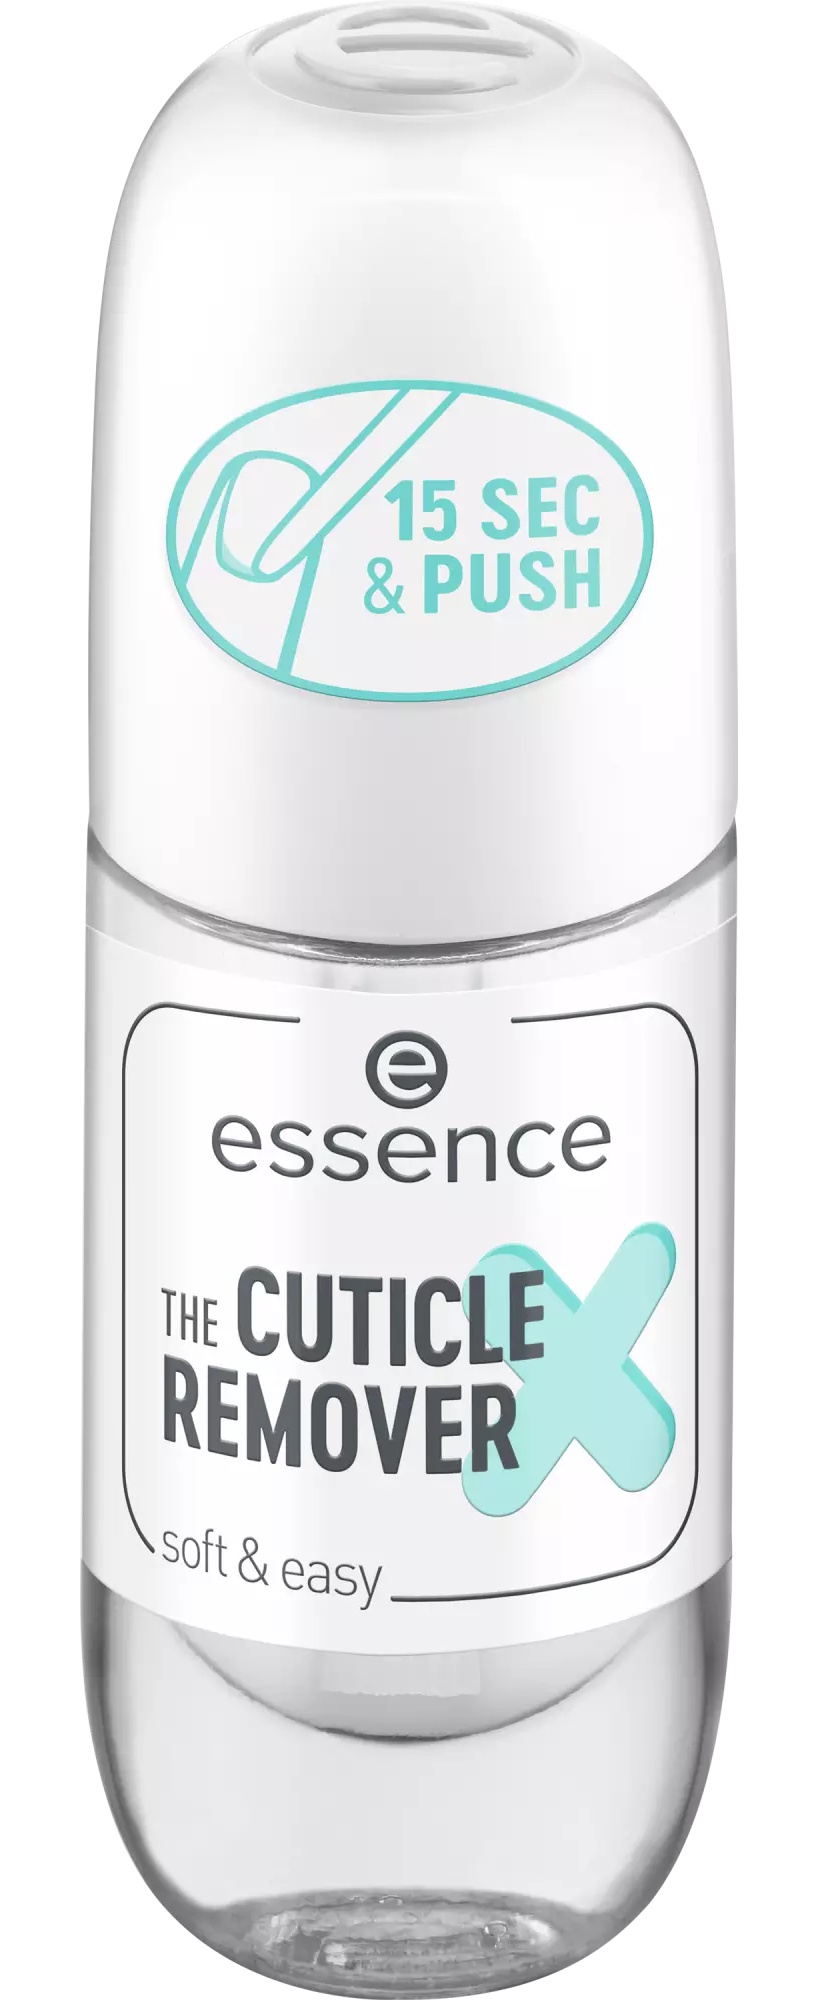 Essence The Cuticle Remover